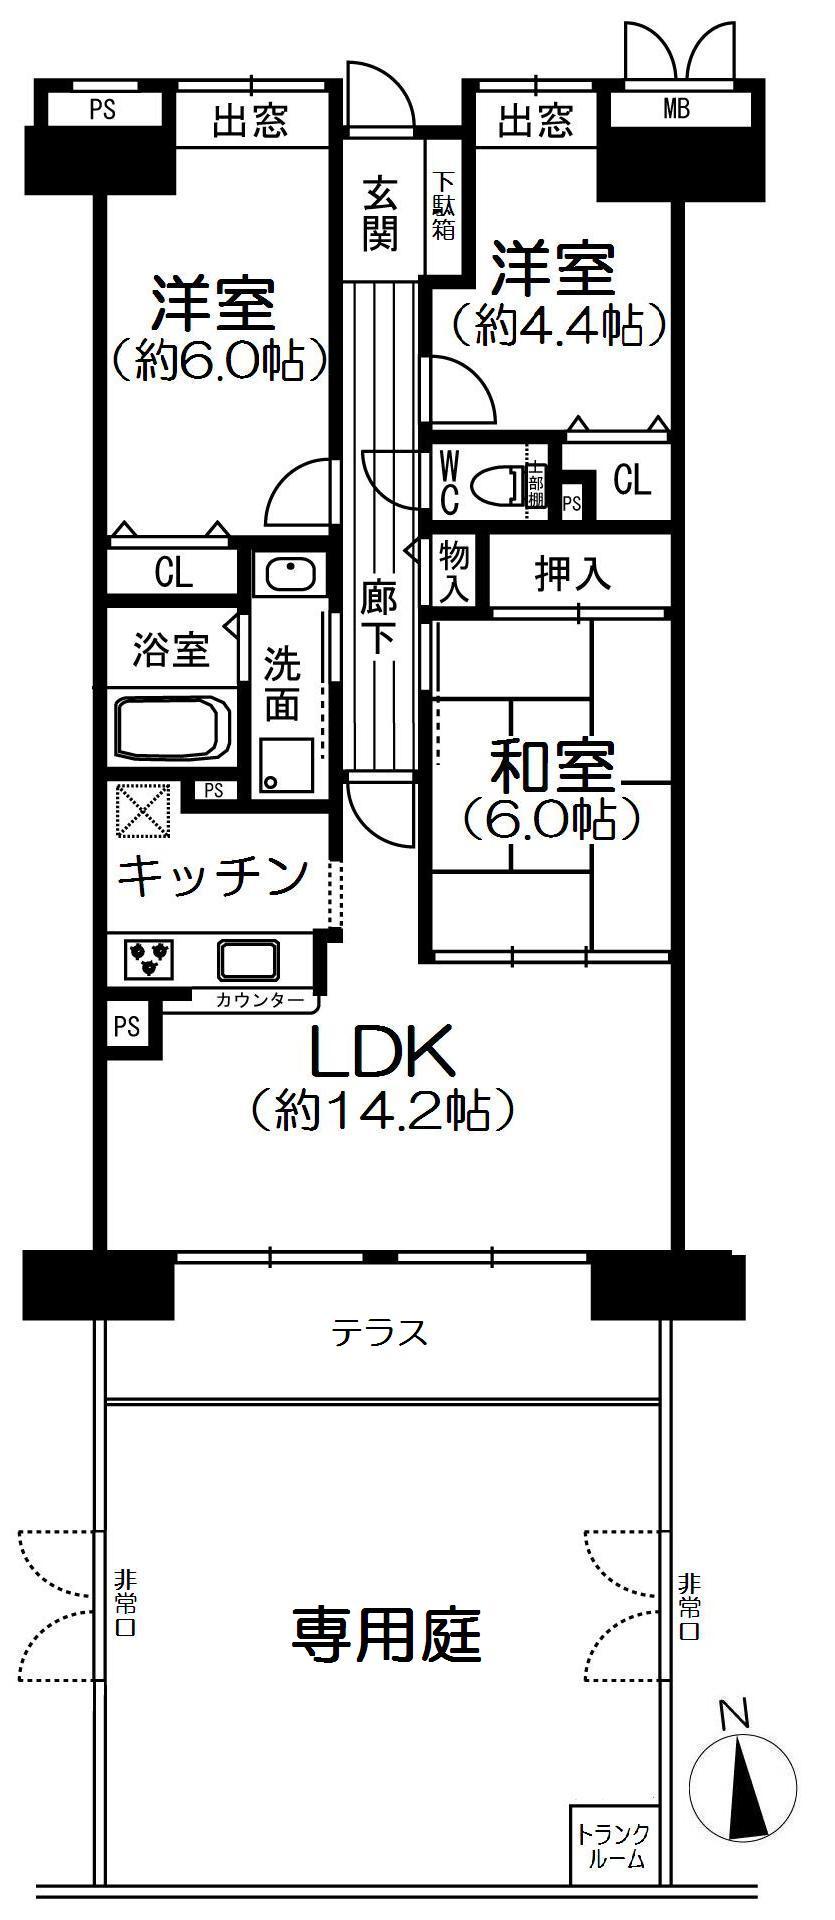 Floor plan. 3LDK, Price 10.9 million yen, Occupied area 67.26 sq m